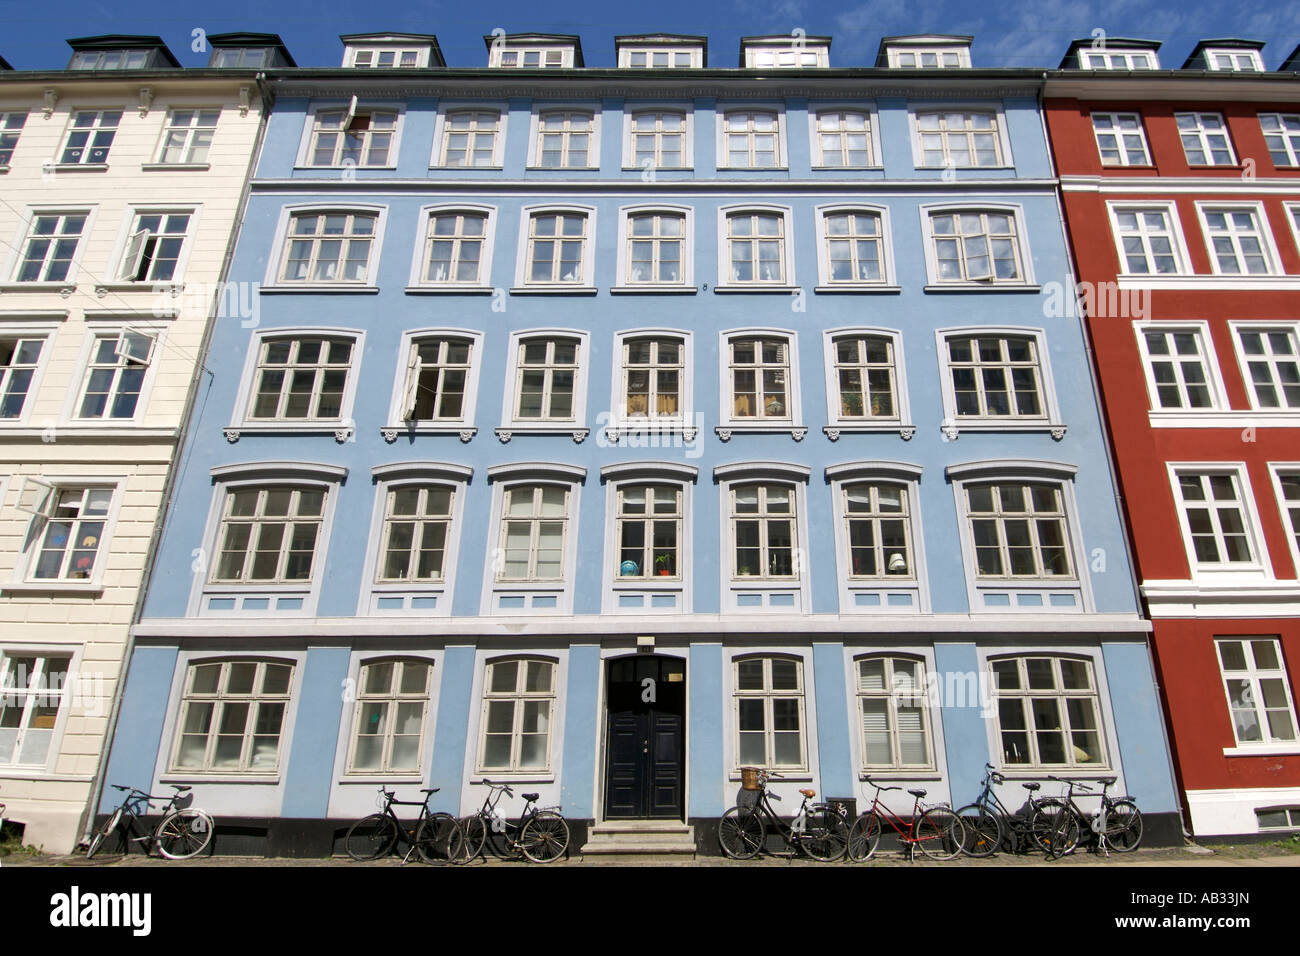 Colourful buildings in Copenhagen Denmark. Stock Photo